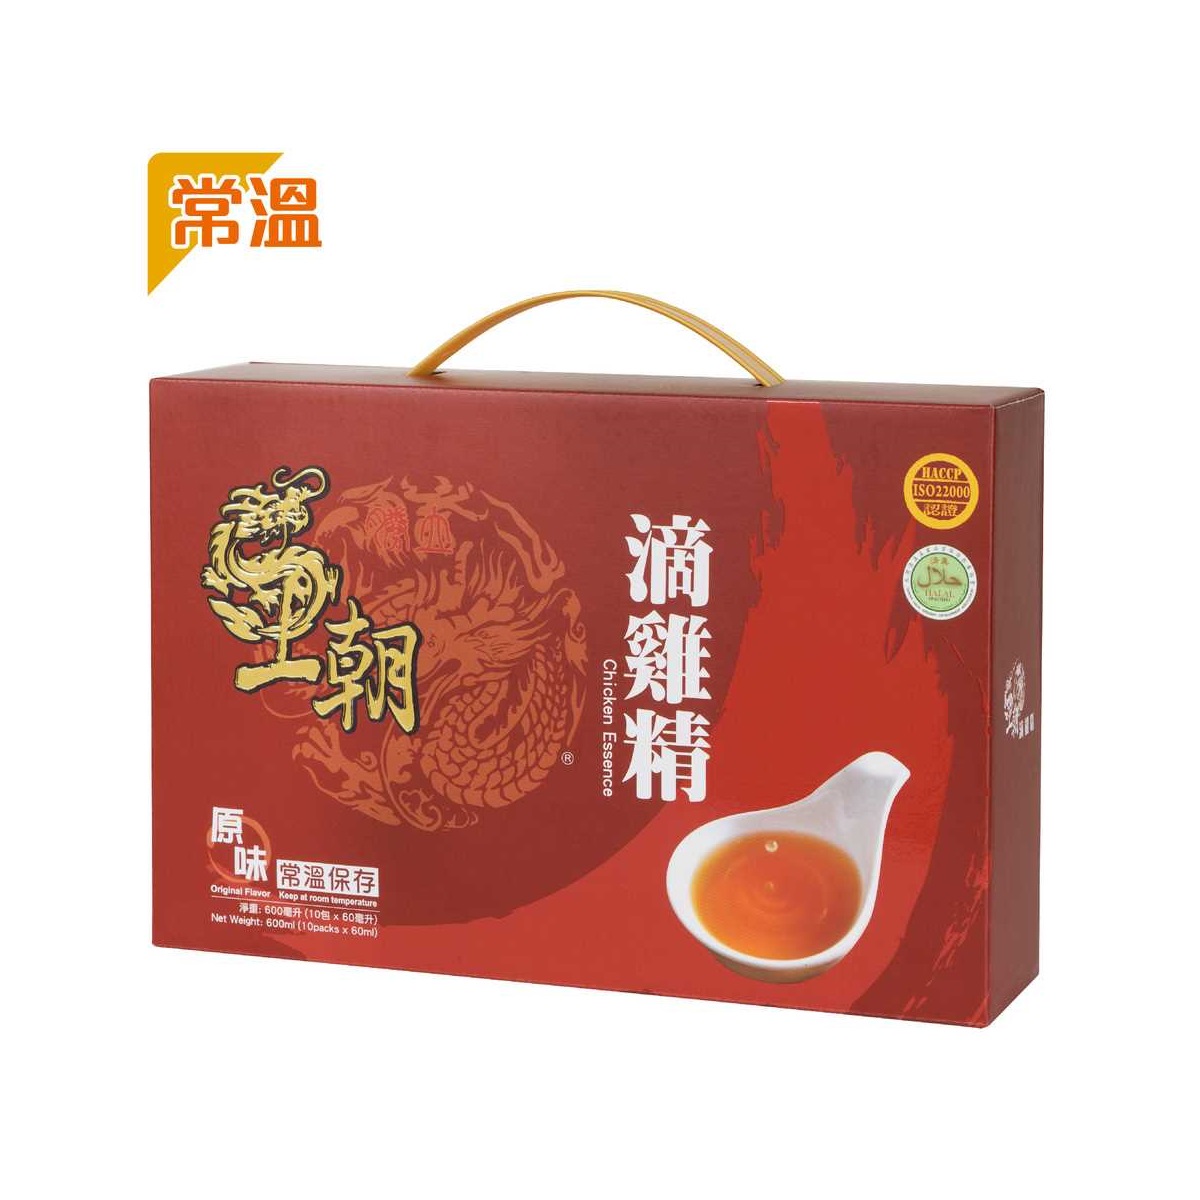 Wang Chao Chicken Essence (Original Flavor) (Ambient - 10 Packs) Bundle of 10